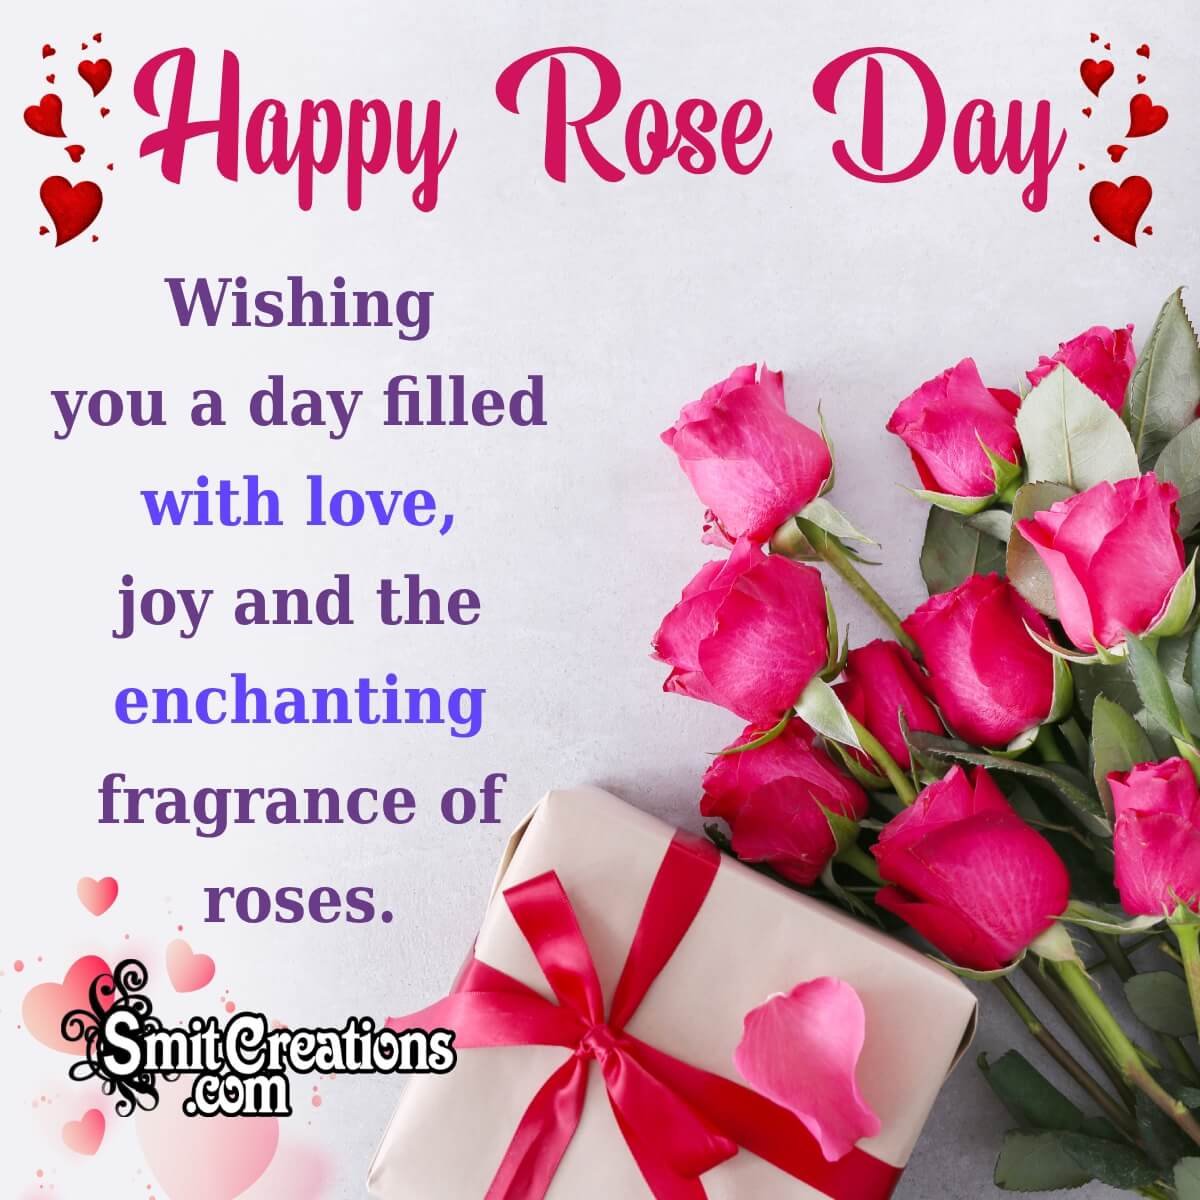 Happy Rose Day Wish Image